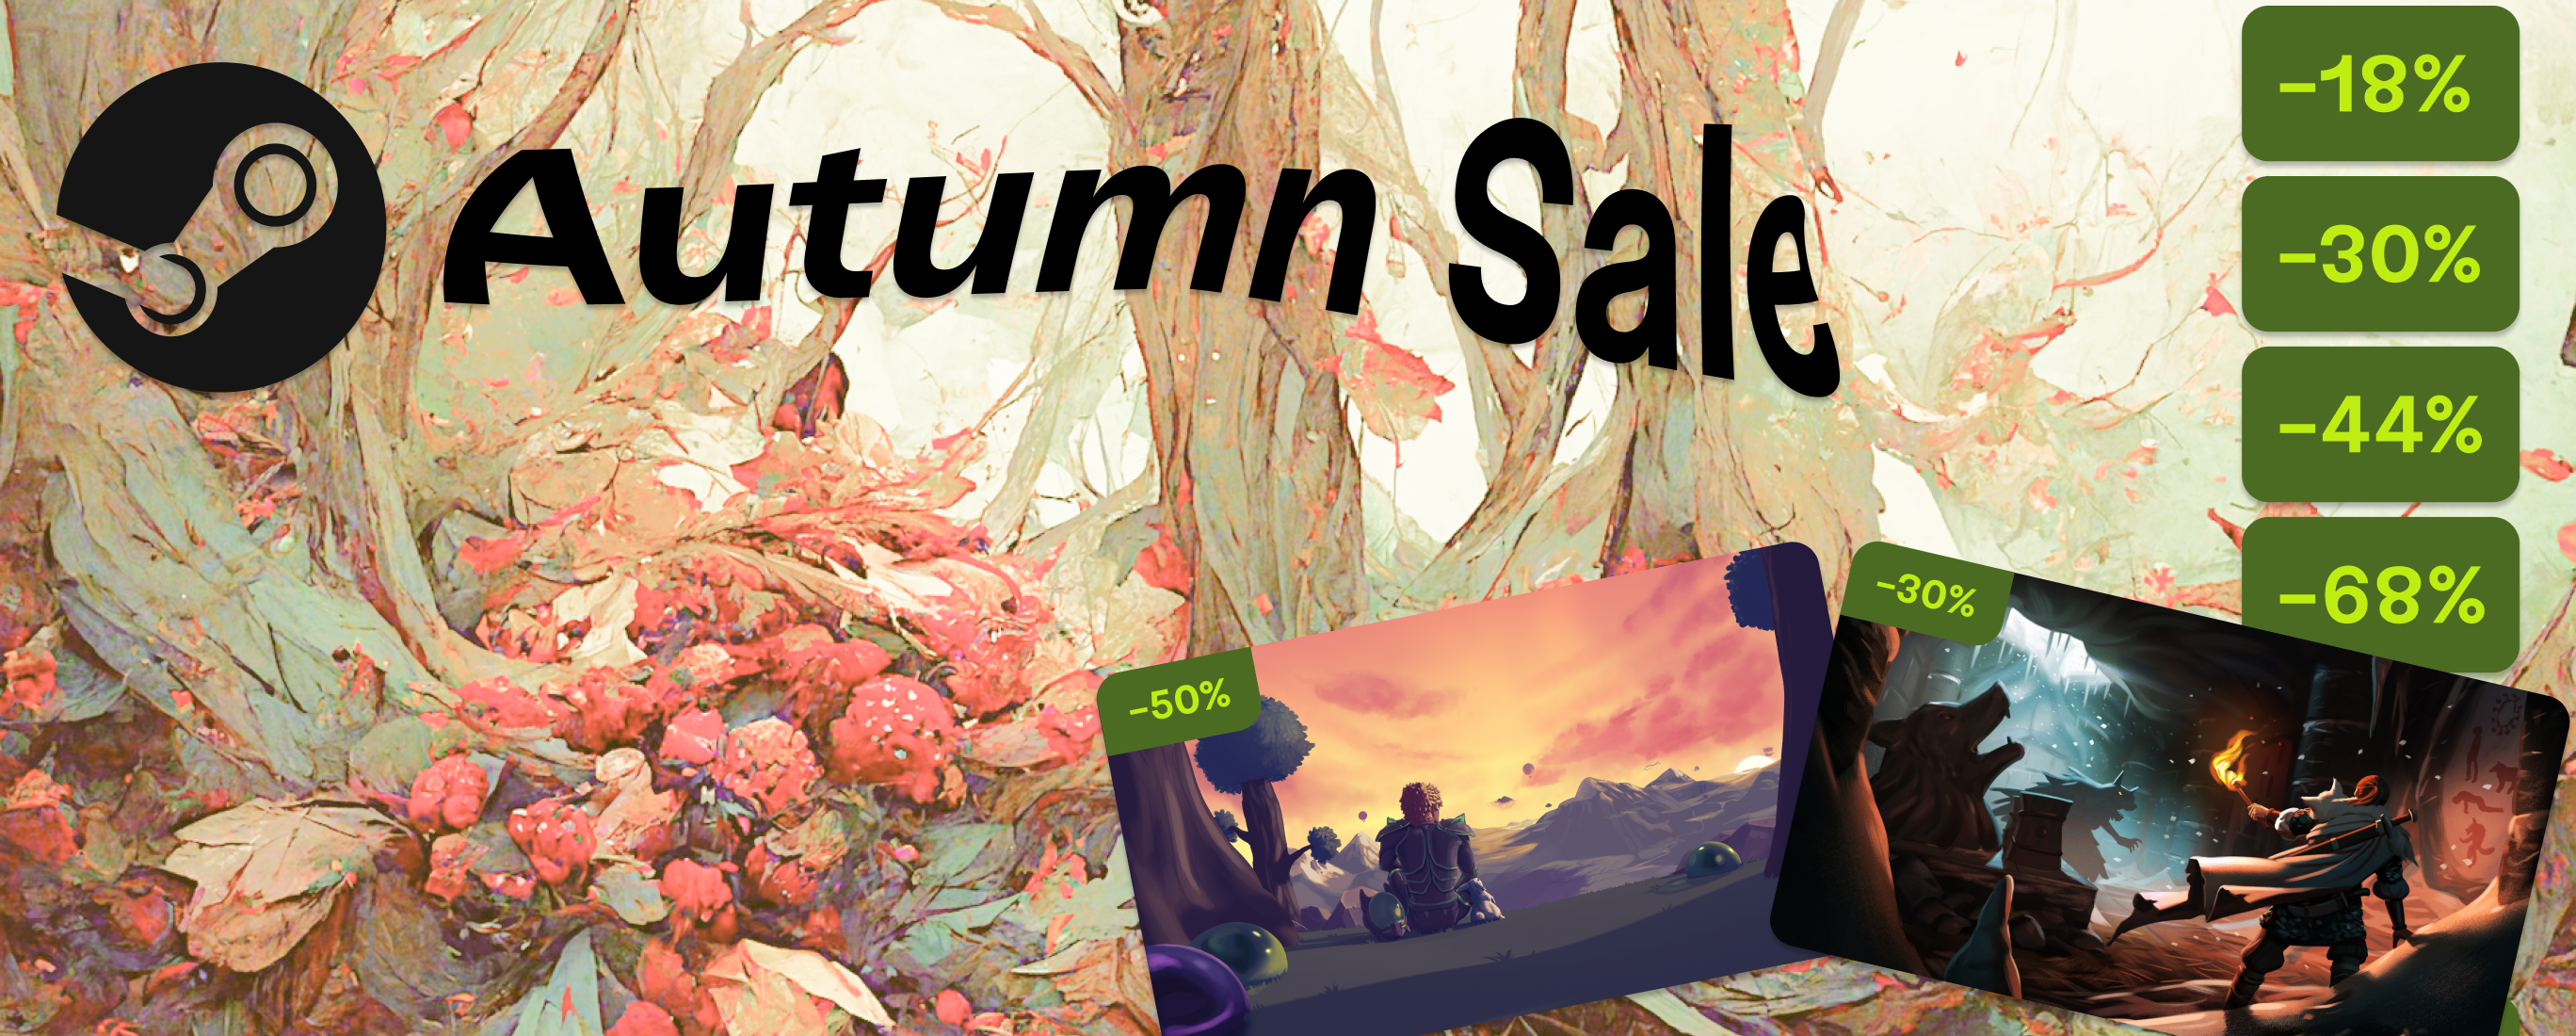 Steam's 2022 Autumn sale discounts games like Valheim, Terraria, and more.